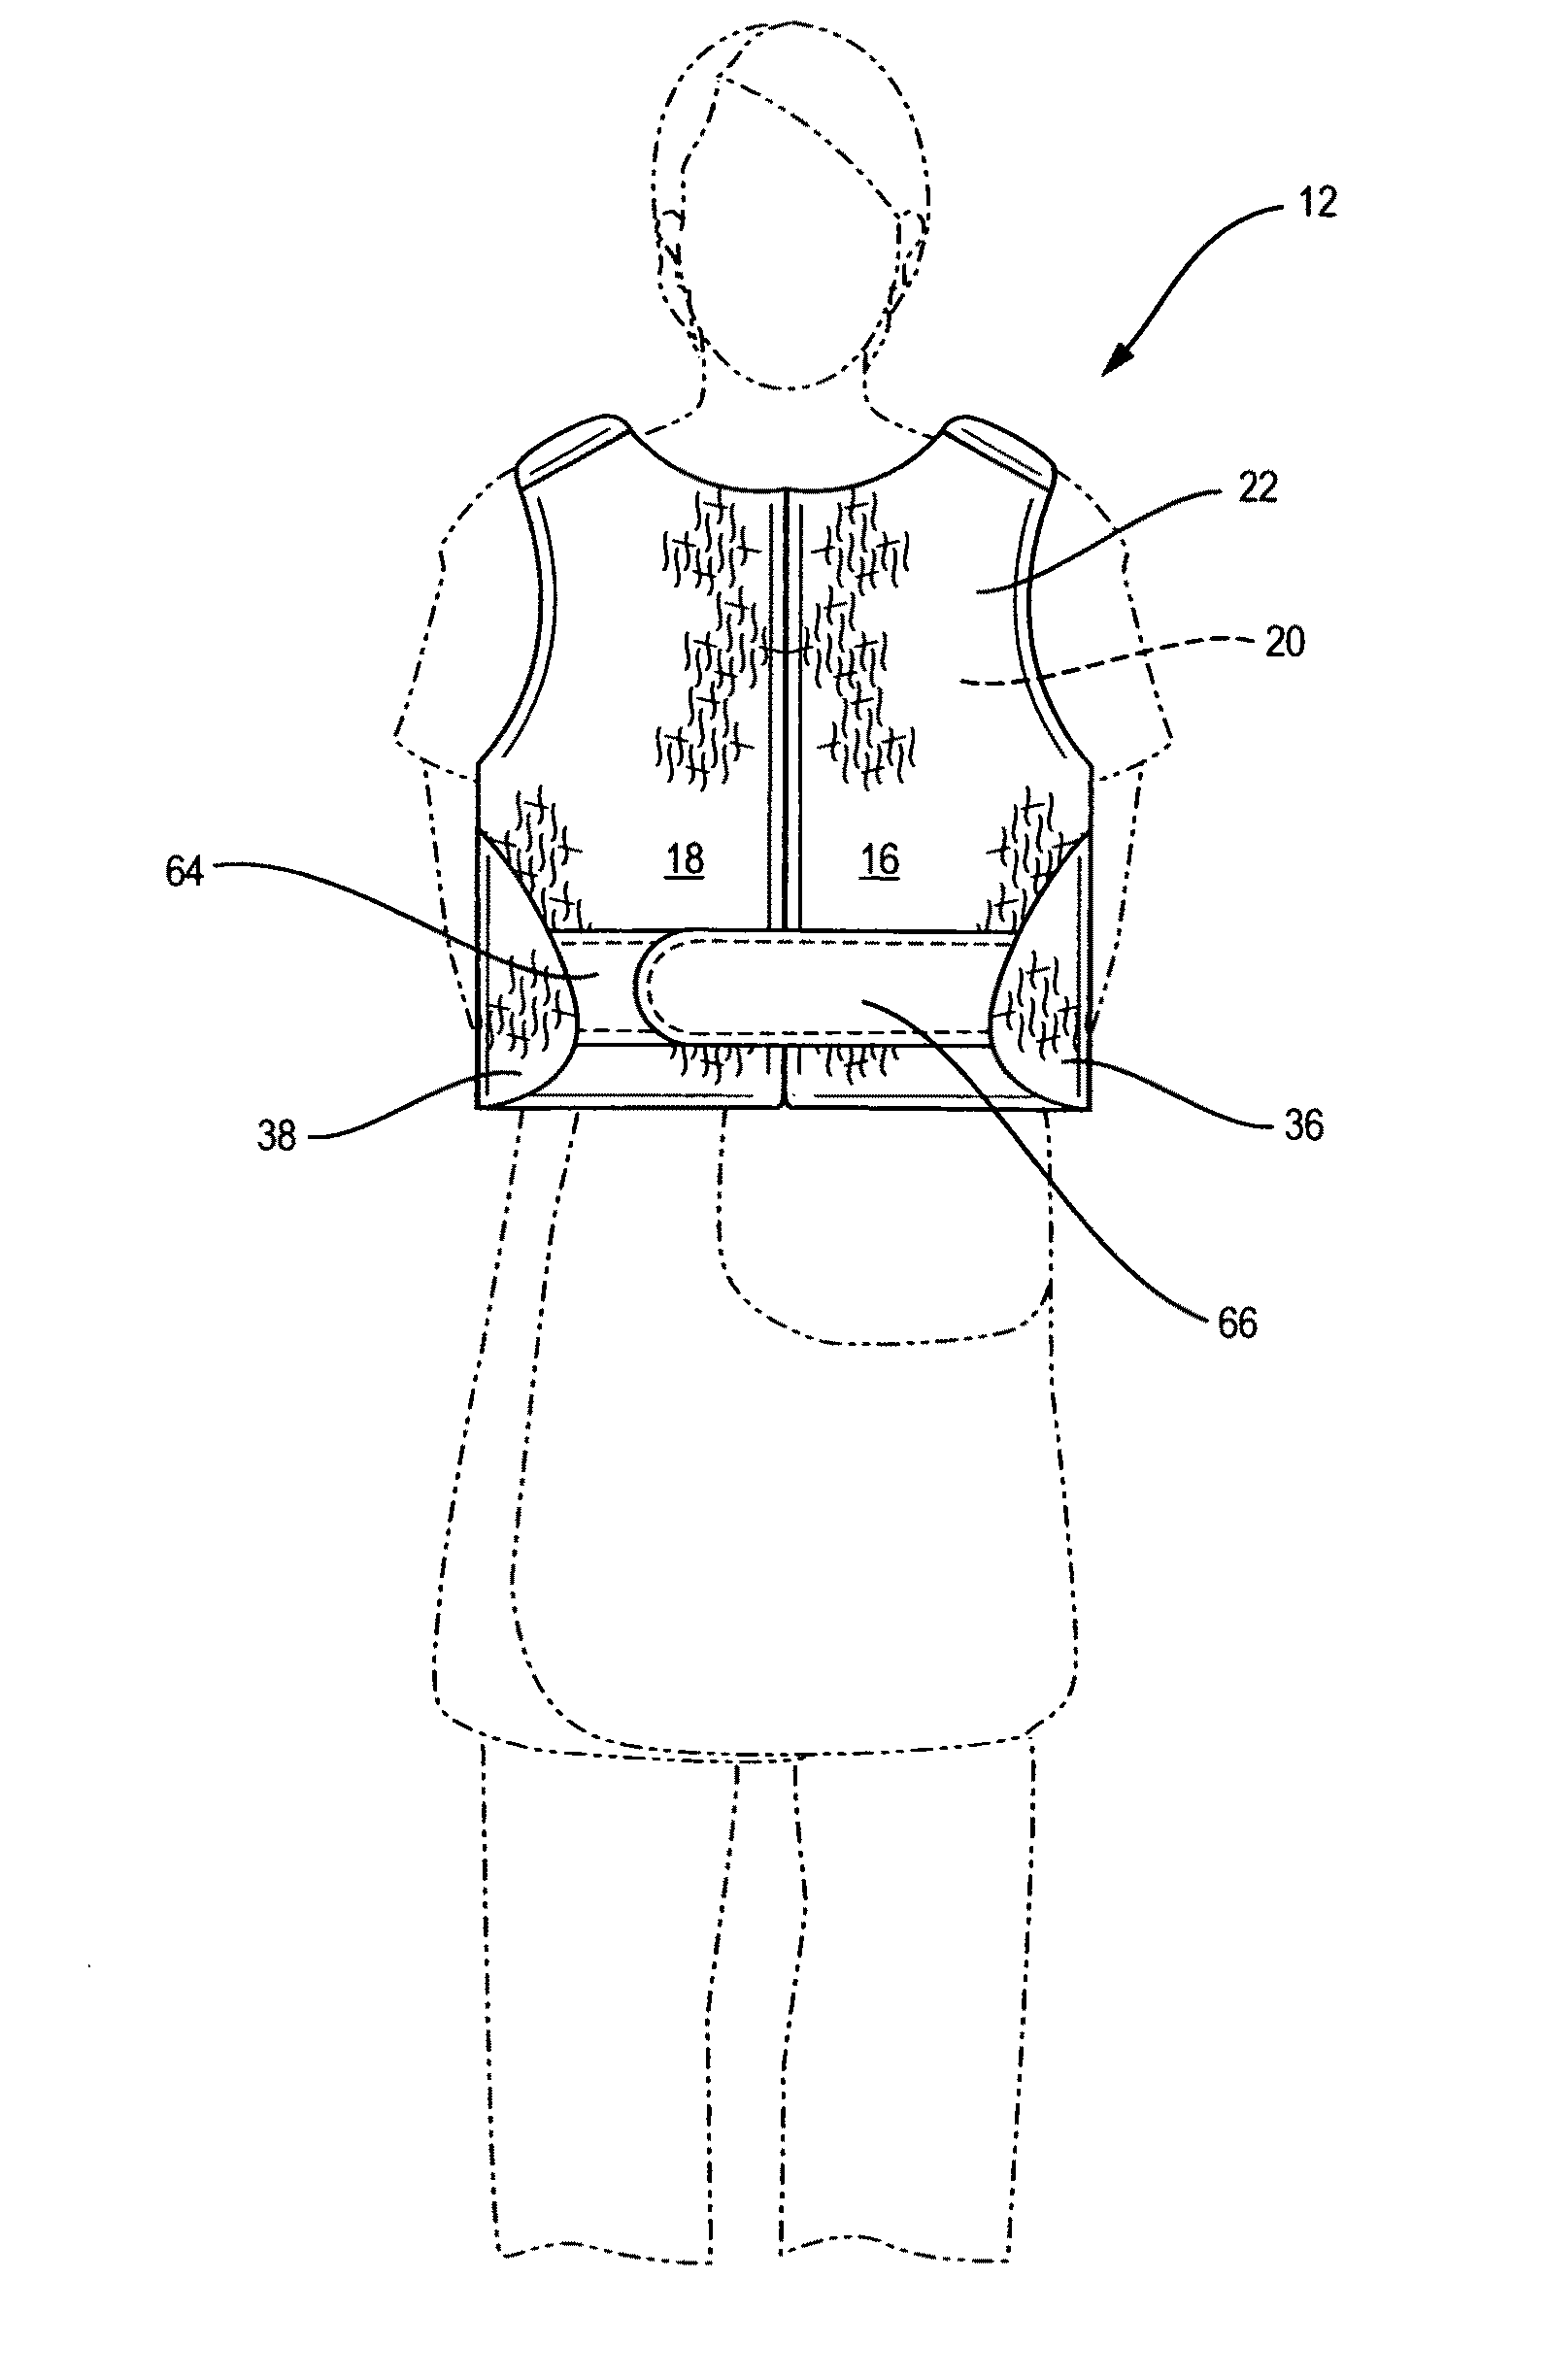 Radiation protective vest